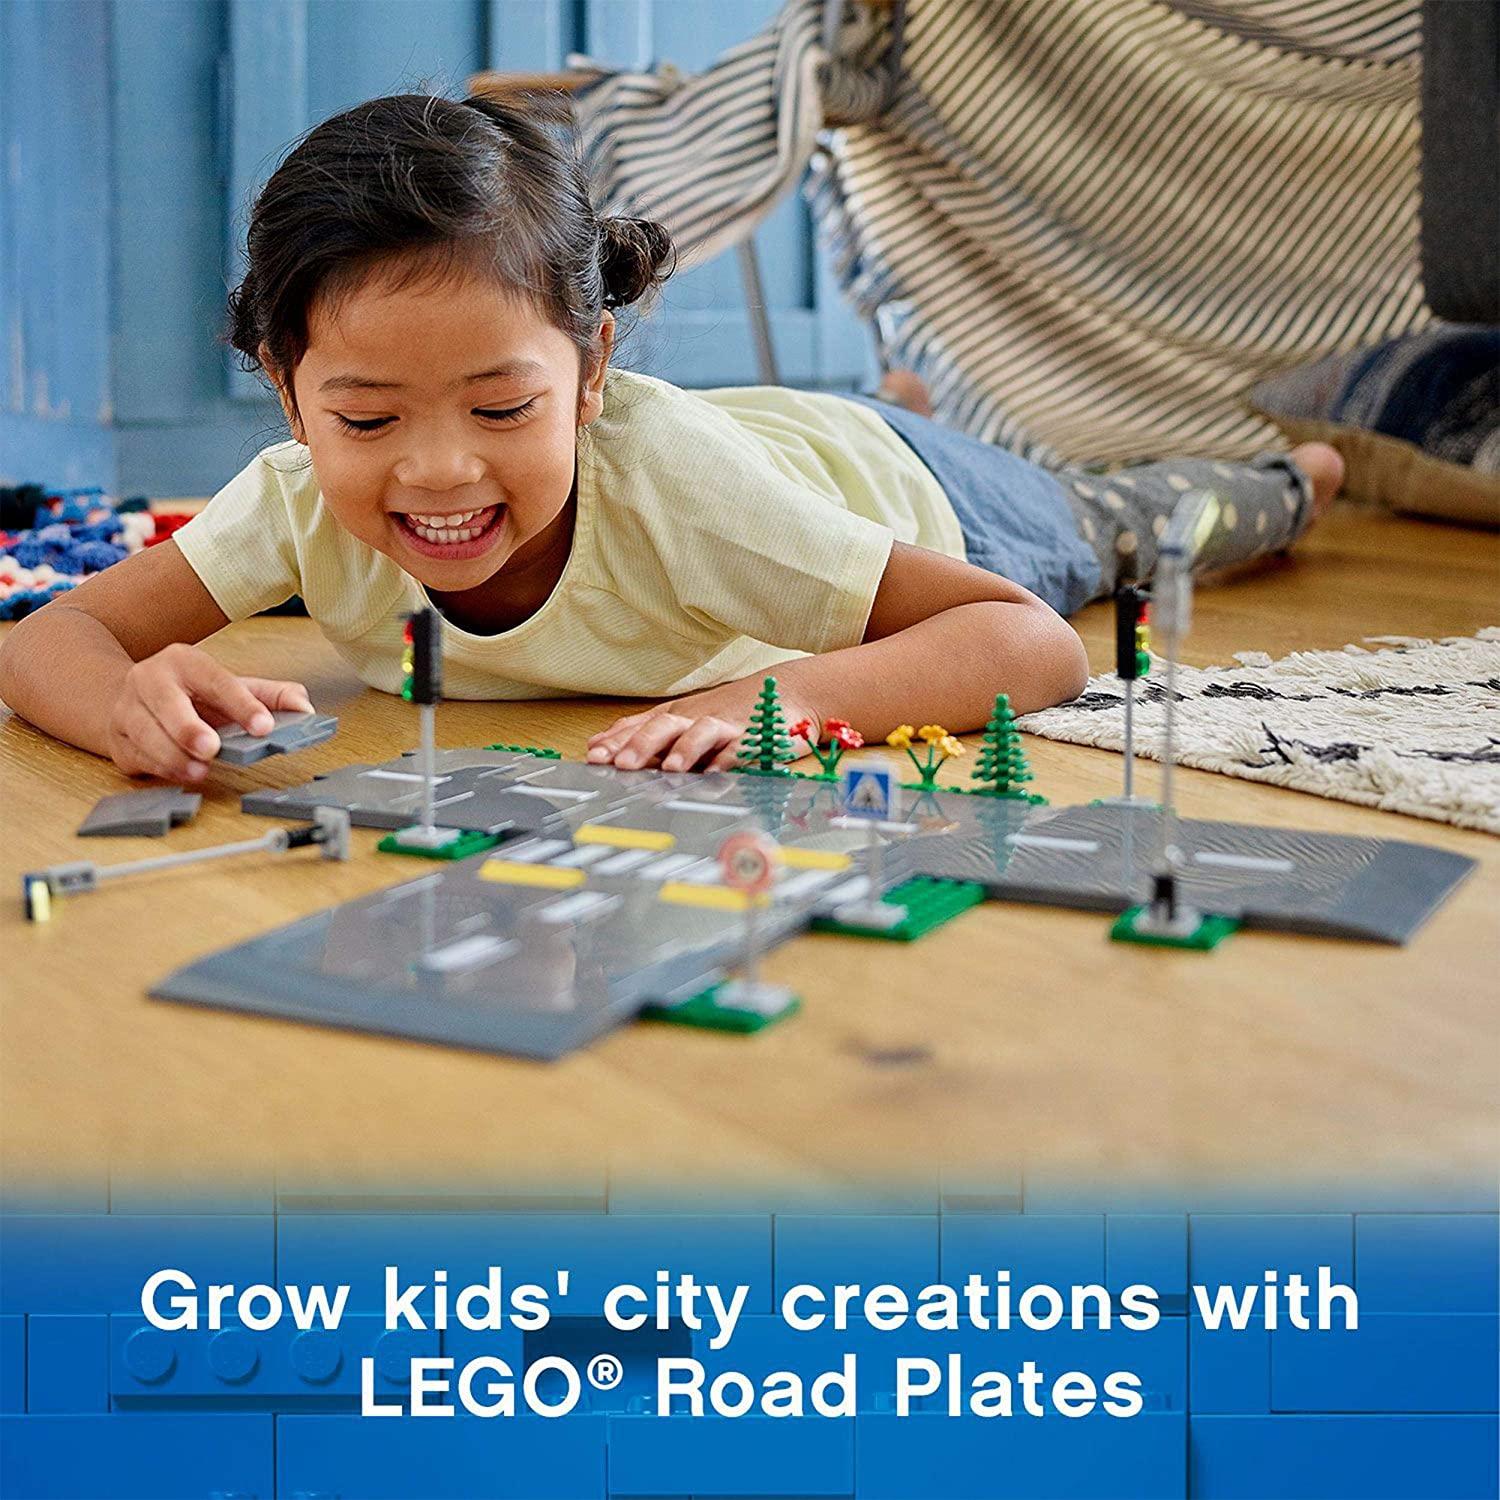 Lego 60304 City Road Plates Toymaster Ballina